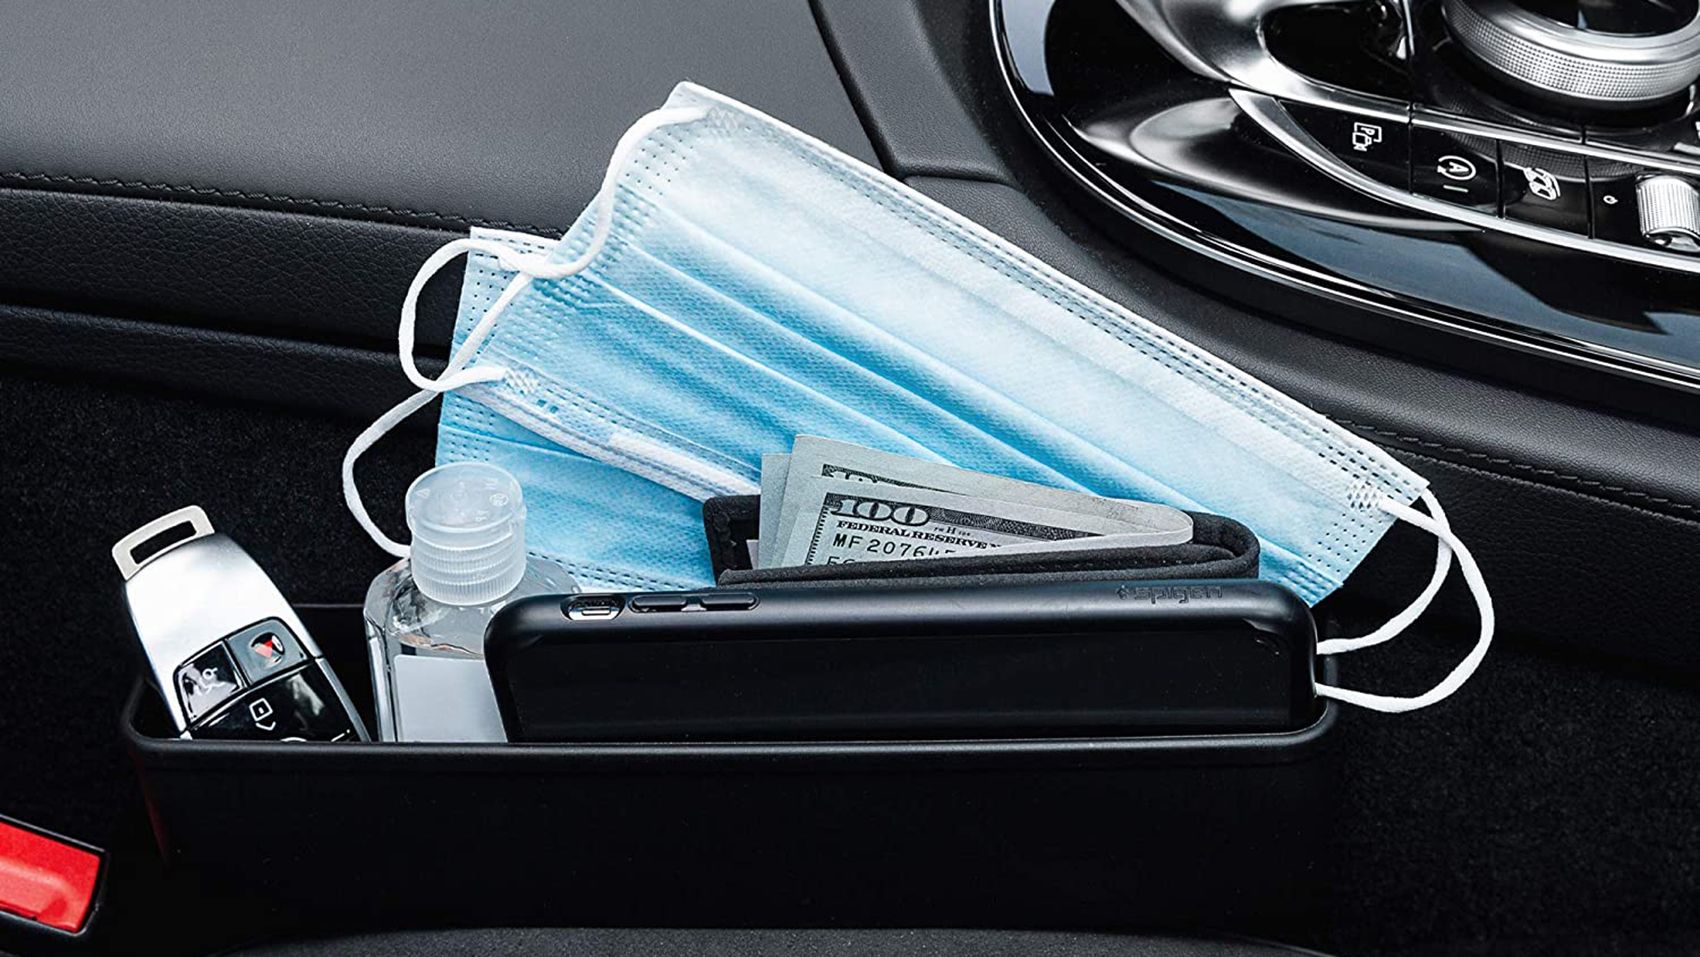 ik ben ziek stil Misbruik 20 products under $25 to keep your car clean and organized | CNN Underscored